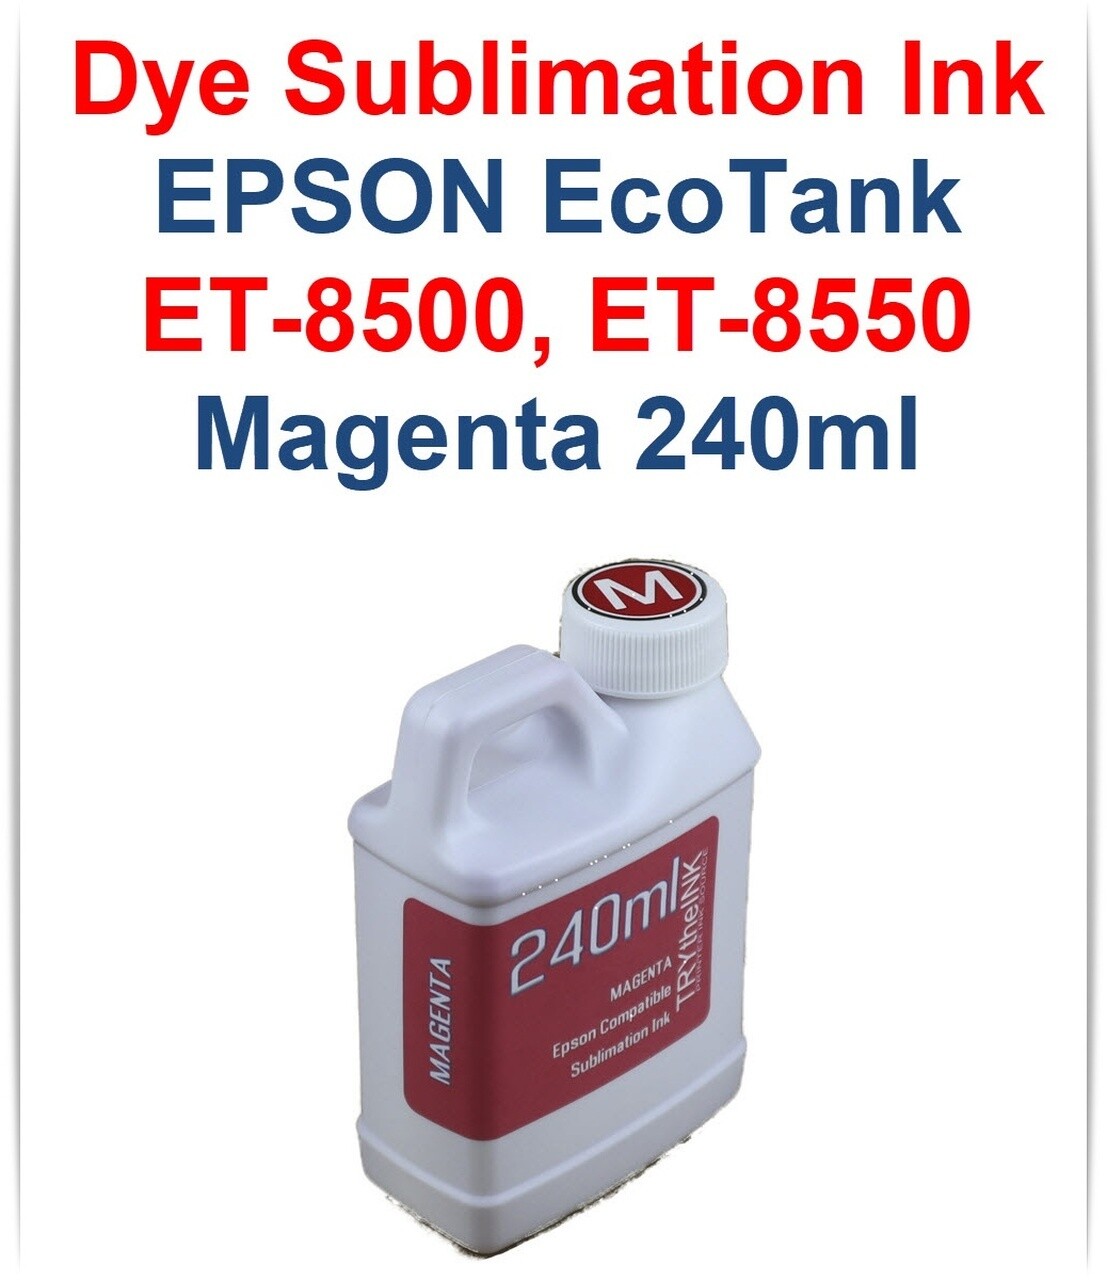 Magenta Dye Sublimation Ink 240ml bottle for EPSON EcoTank ET-8500 ET-8550 printers